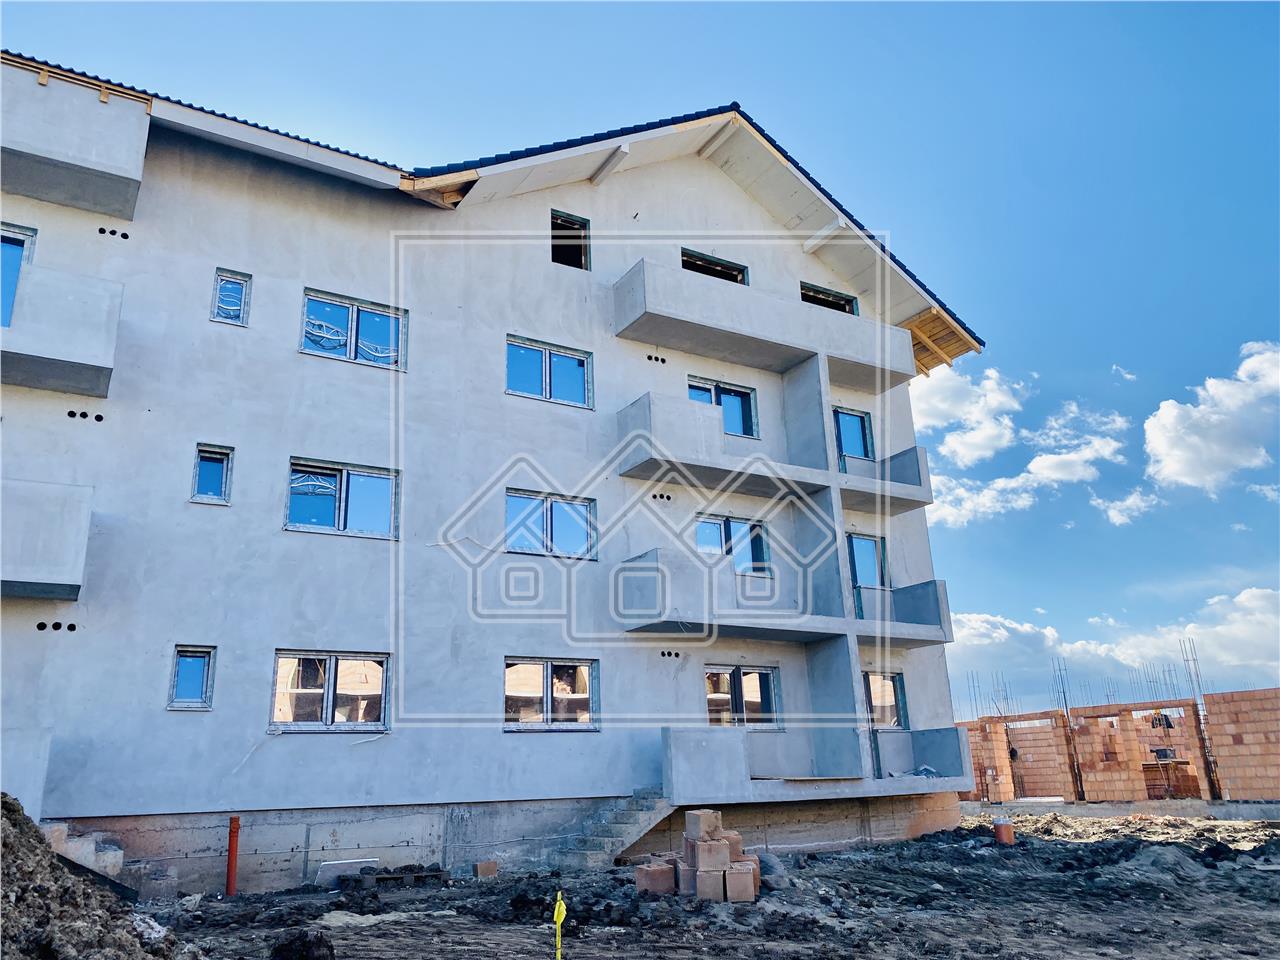 Apartament de vanzare in Sibiu - 2 camere, 2 bai,parter- Doamna Stanca